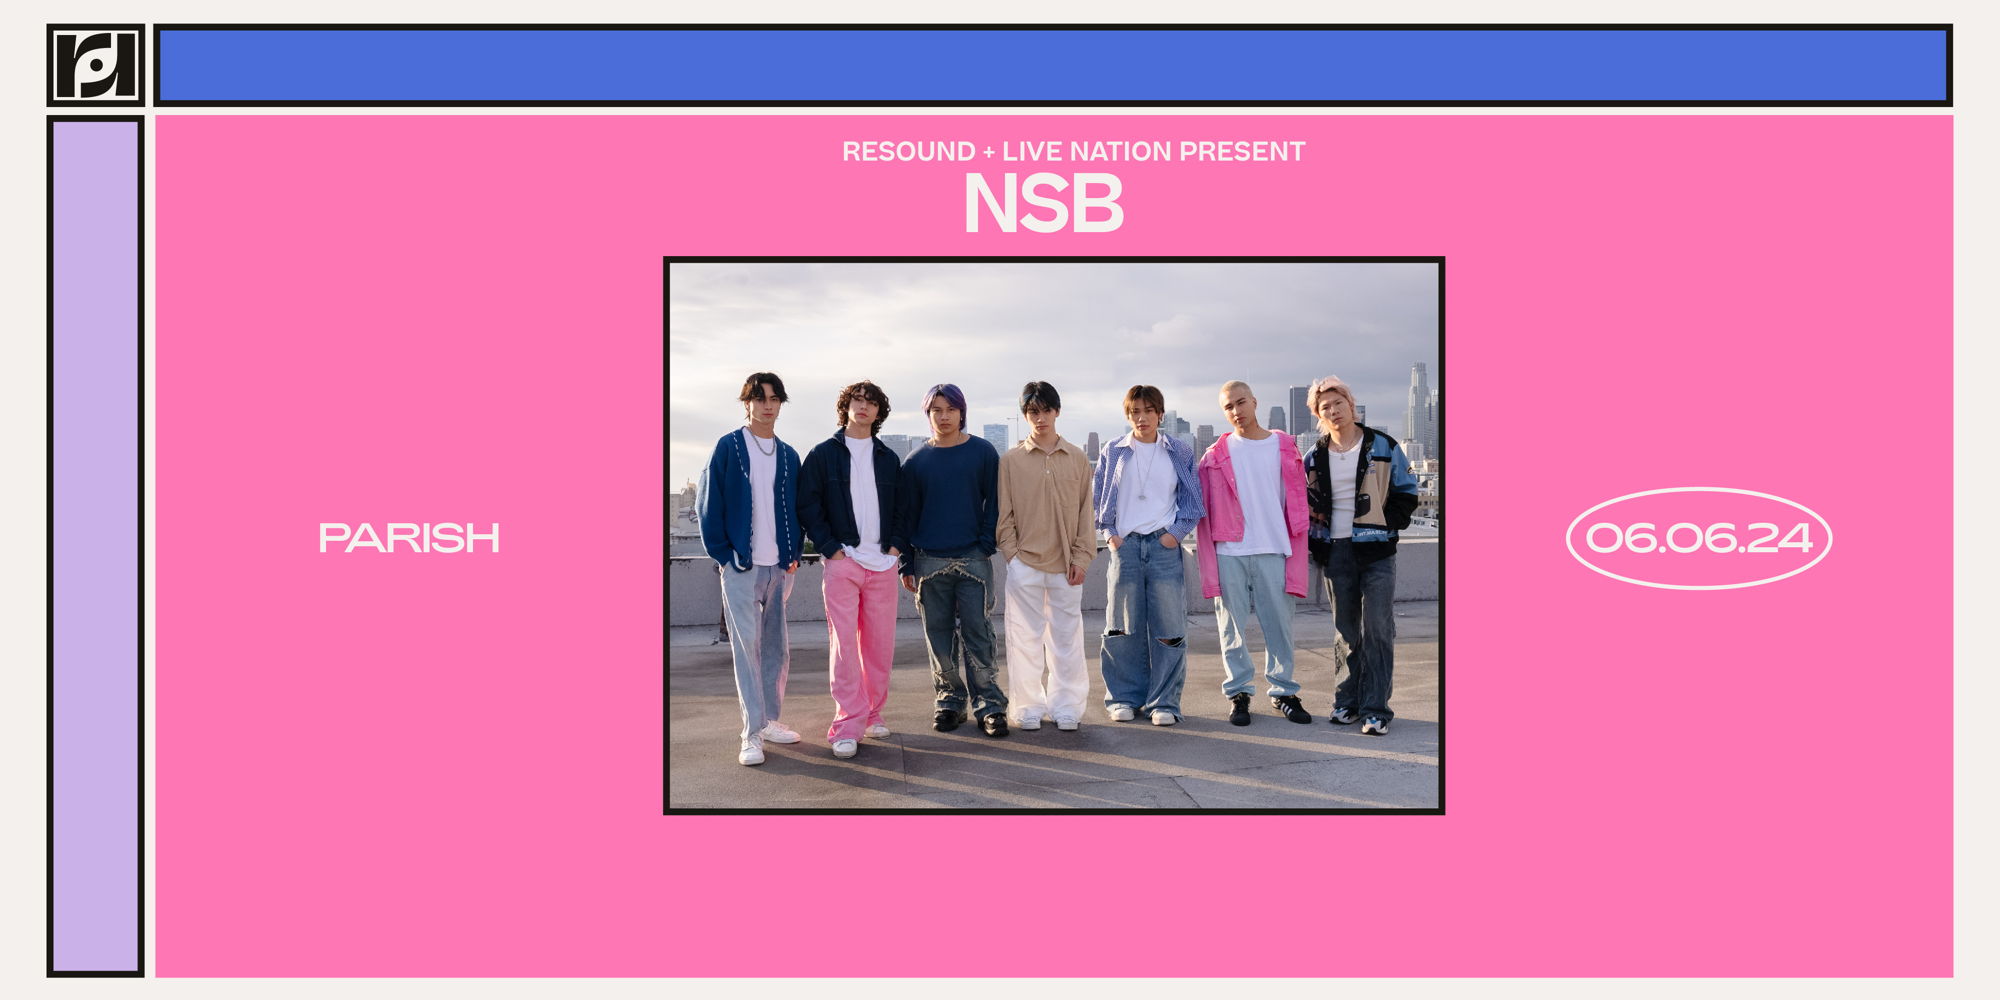 Resound Presents: NSB on 6/6 at Parish promotional image